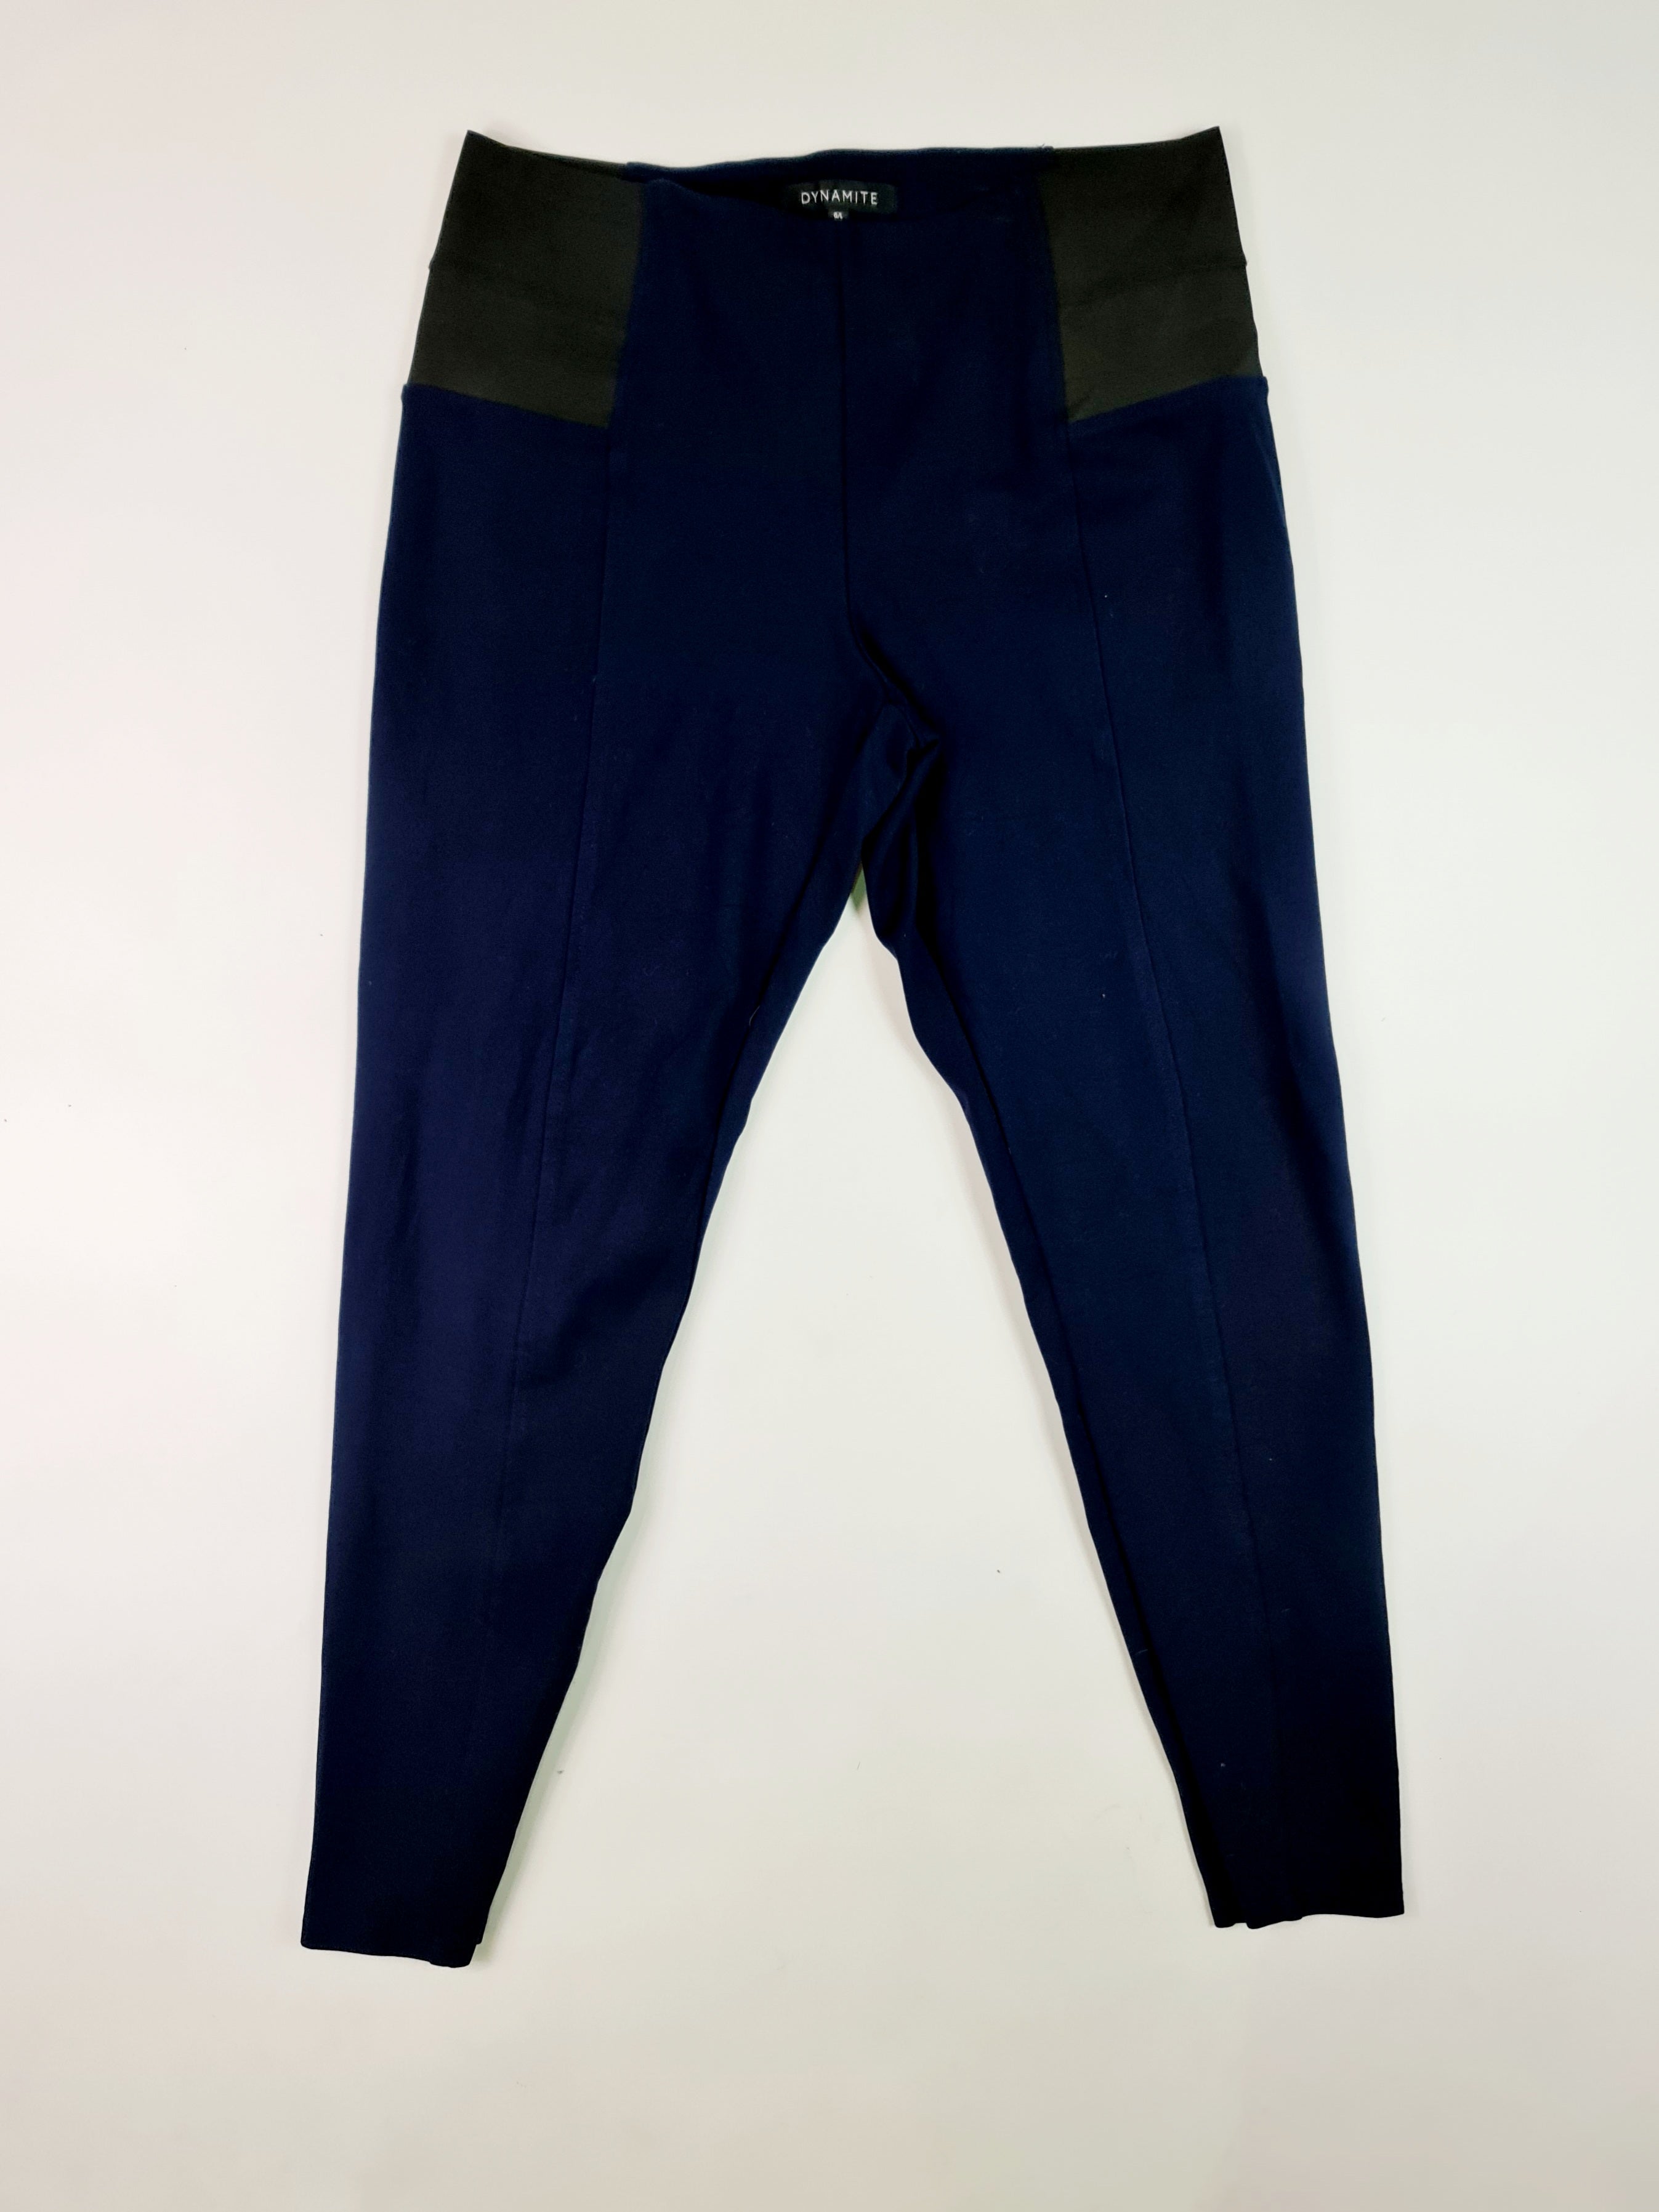 Pantalon, Dynamite - Azul Oscuro (Talla: L/G)